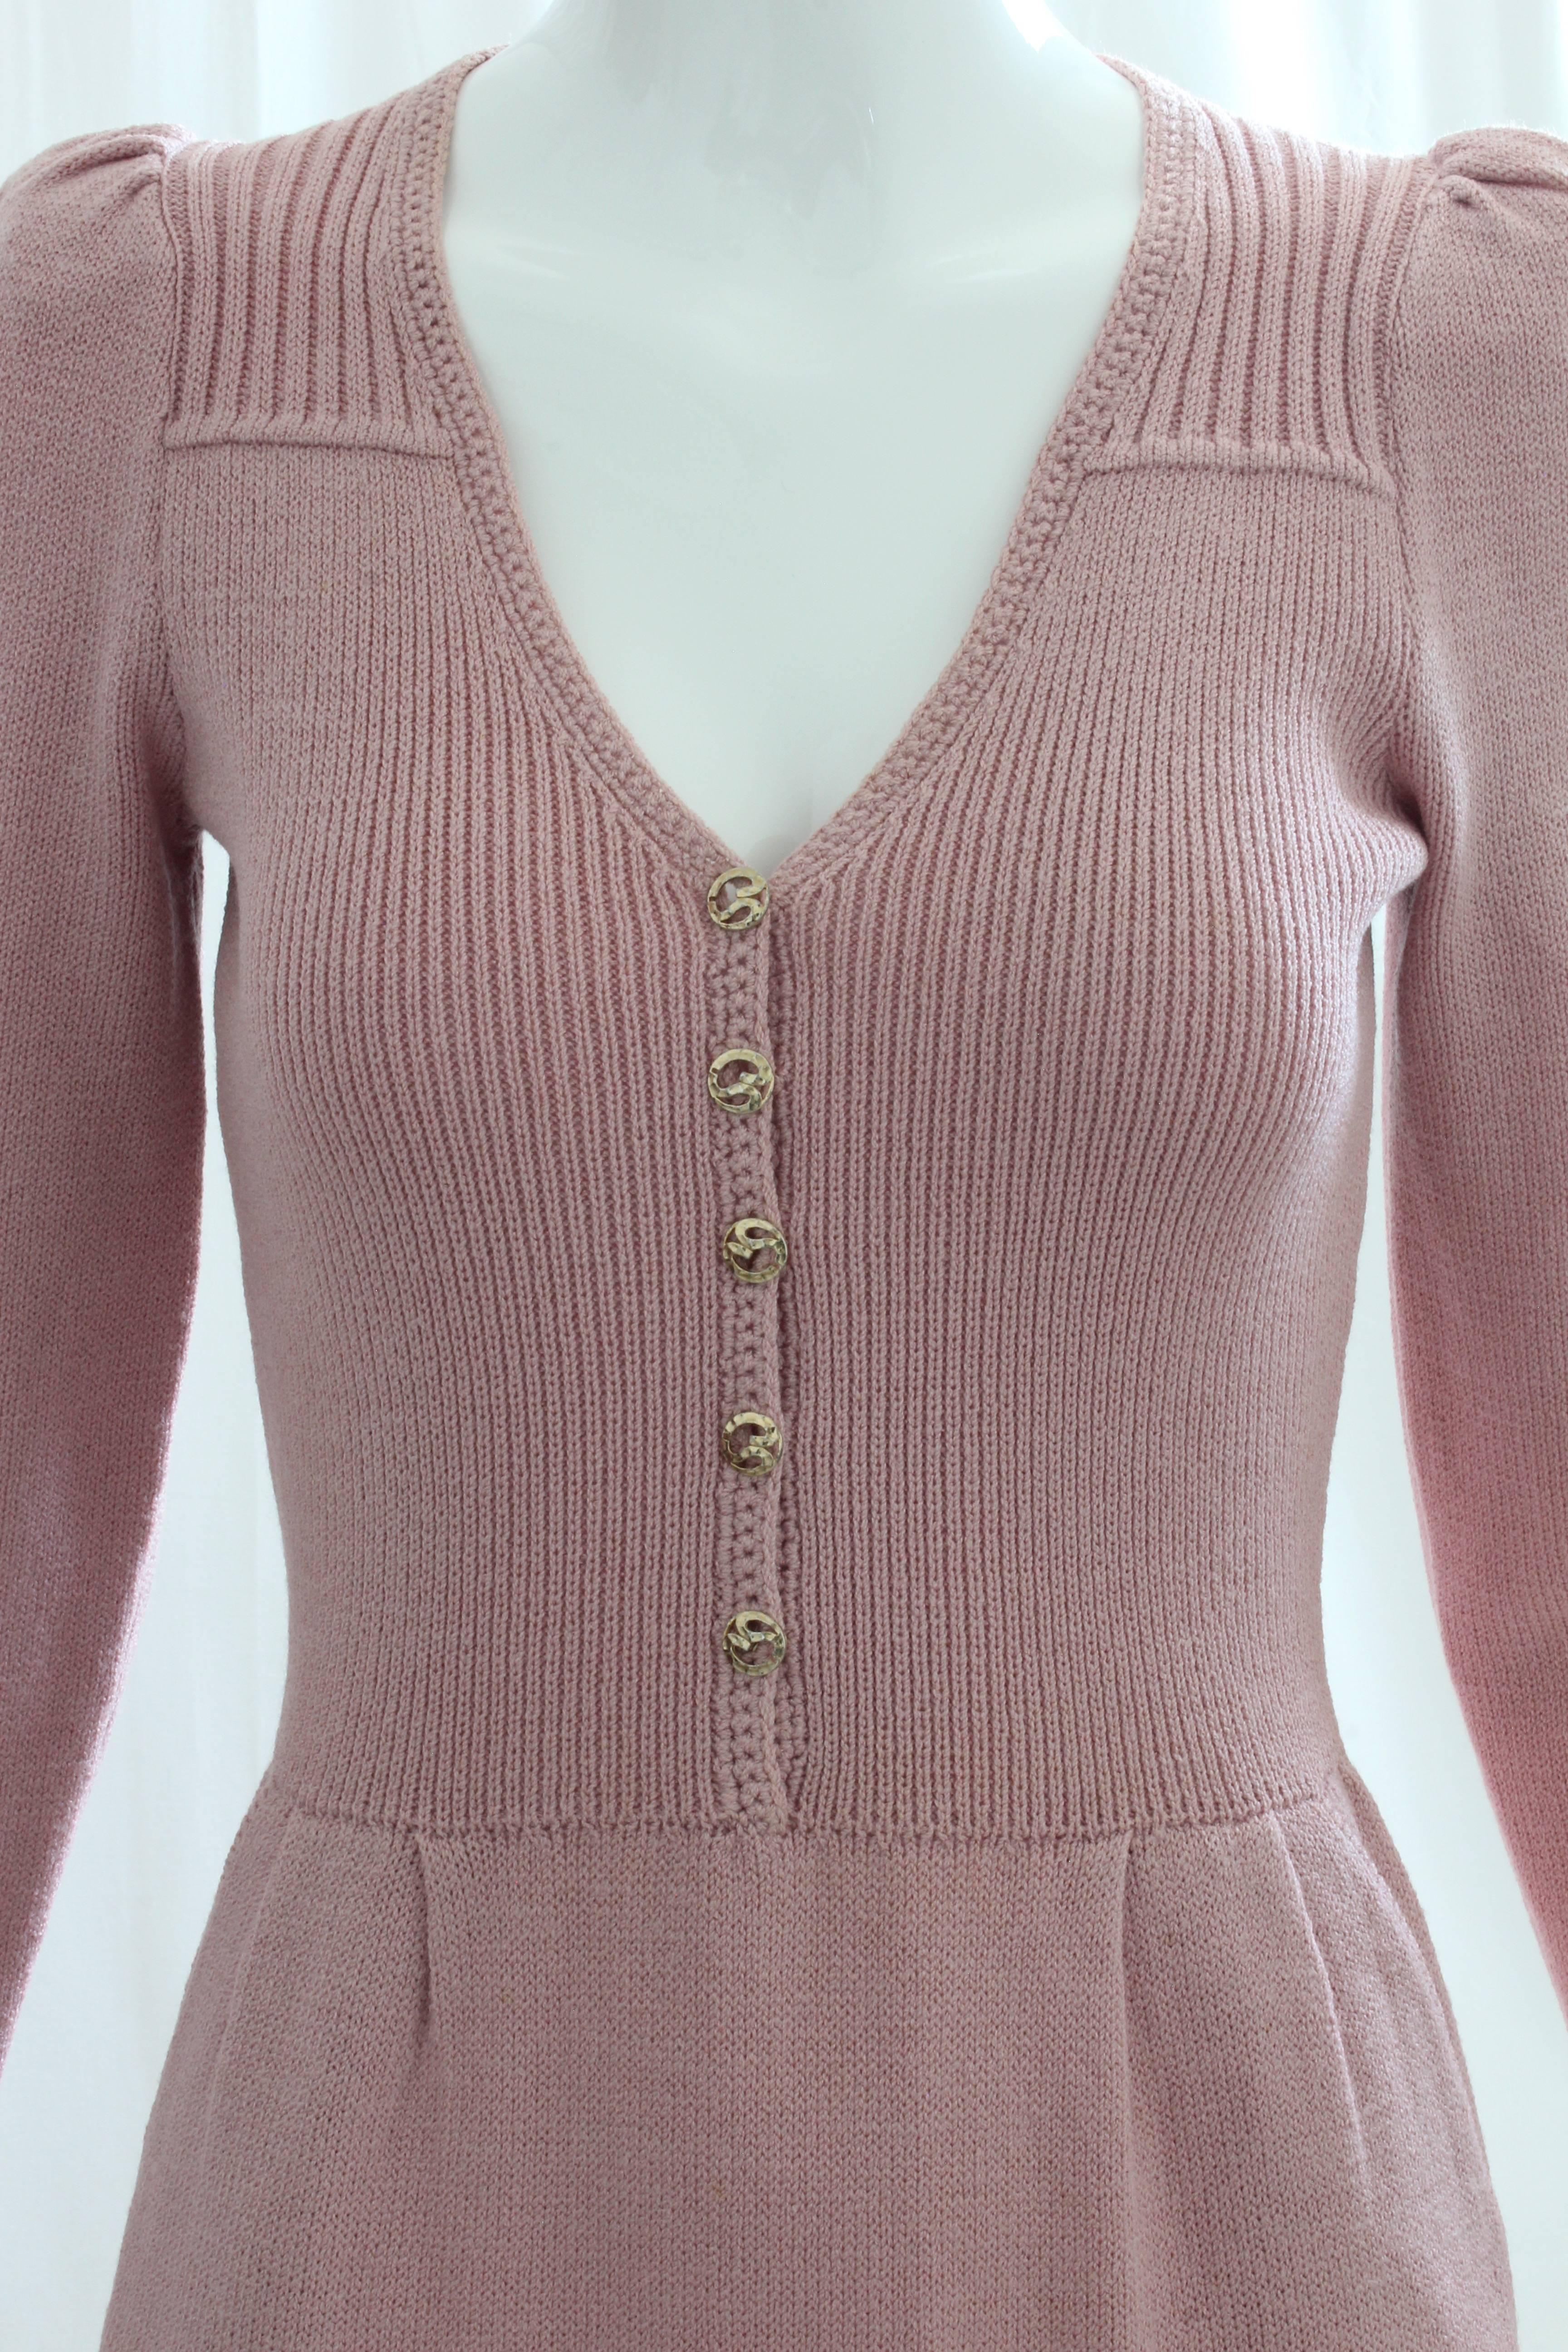 Women's St John by Marie Gray Pink Knit Dress Vintage 70s Sz M